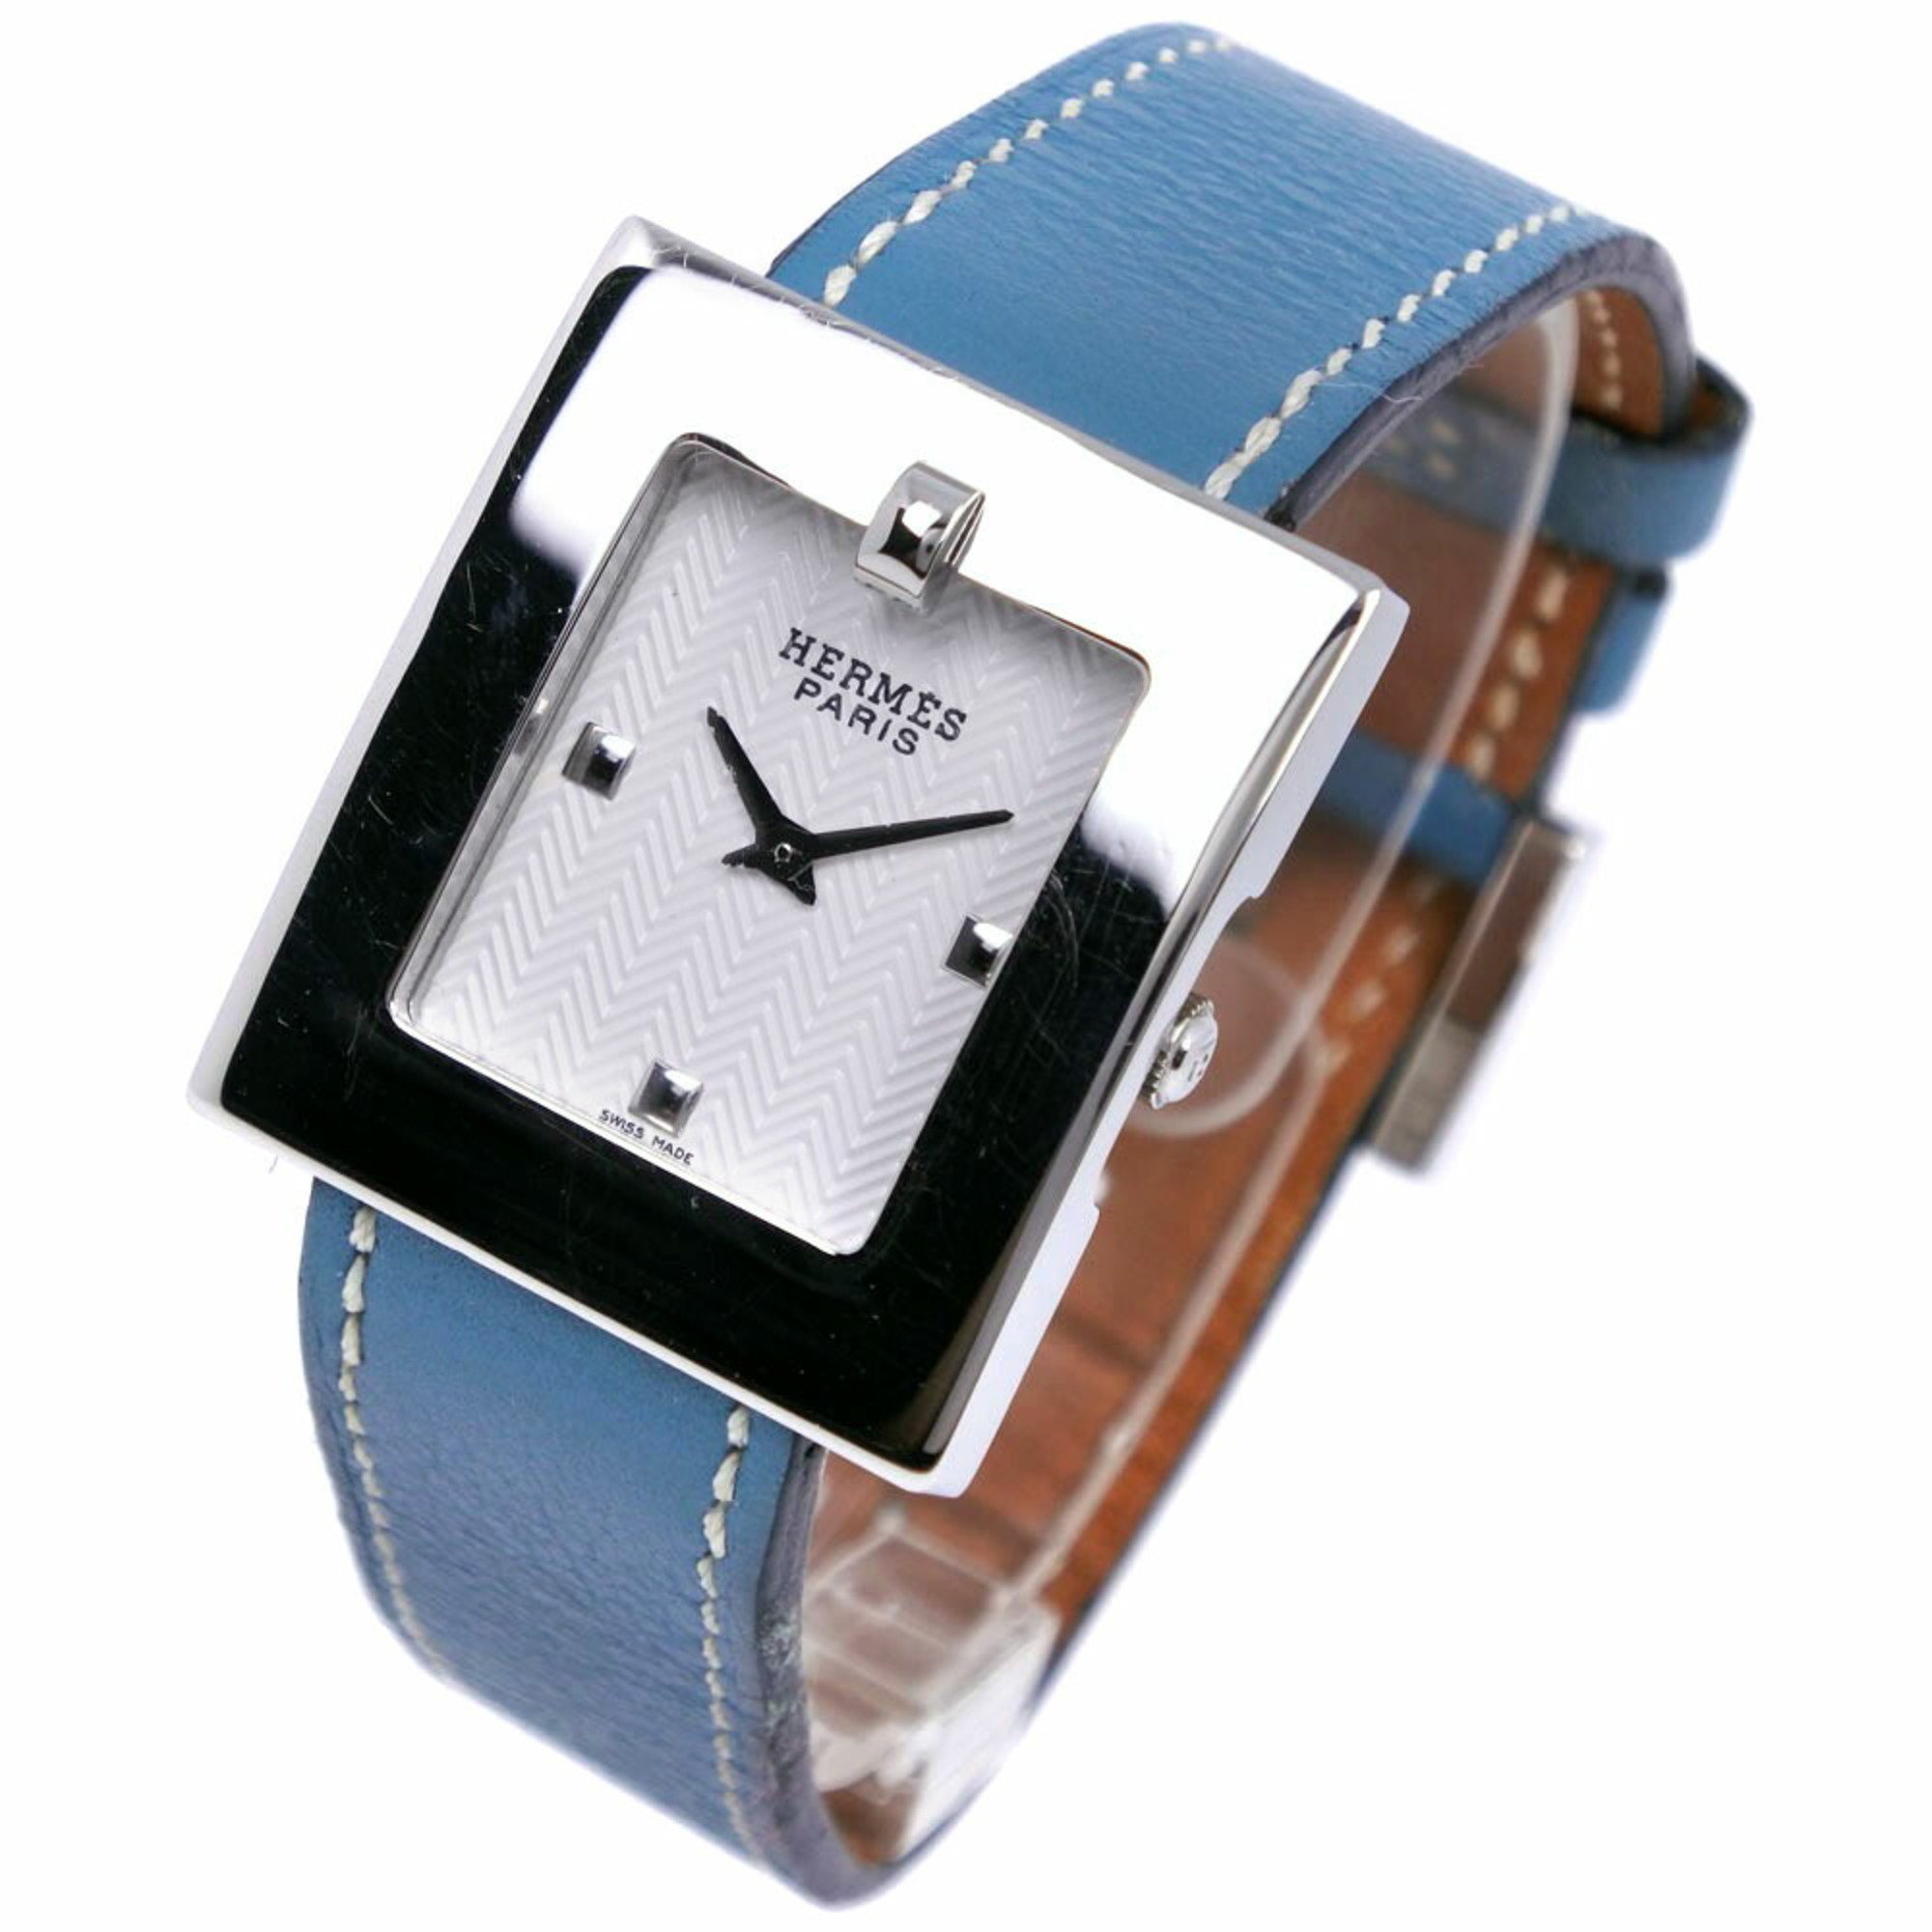 HERMES Hermes Belt Watch BE1.210 Stainless Steel x Leather Light Blue P Quartz Analog Display Women's White Dial